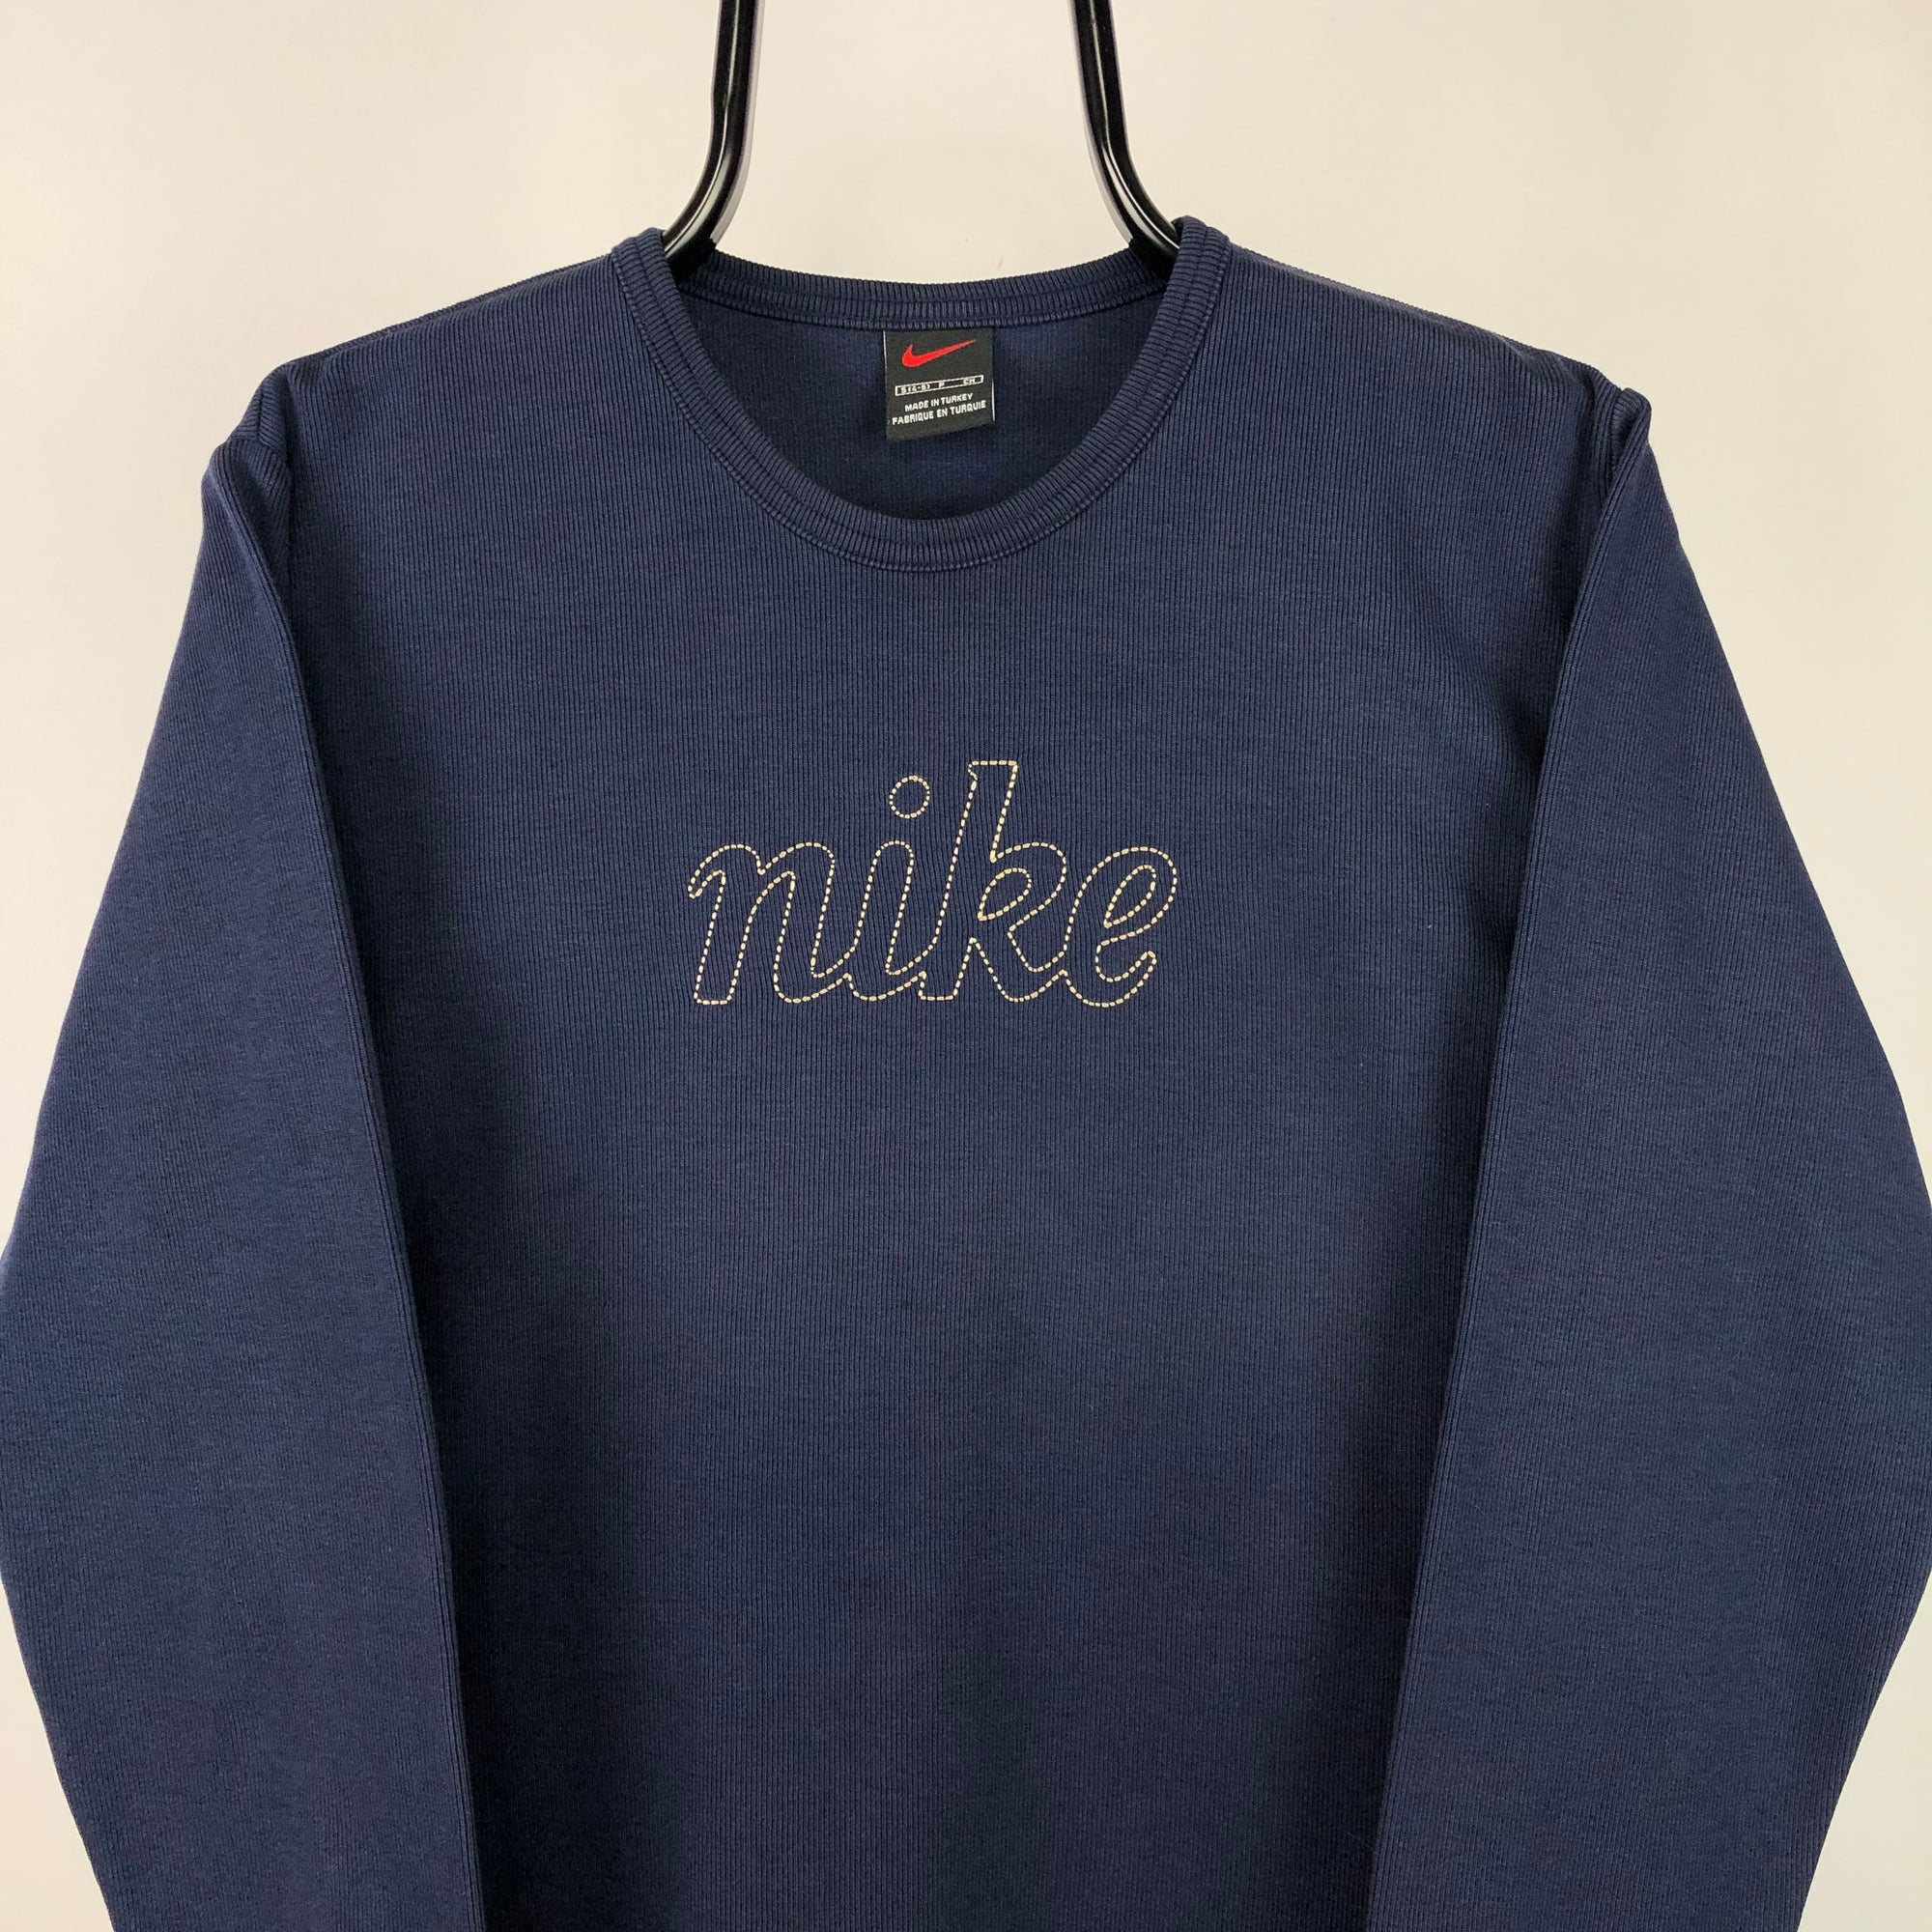 Vintage 90s Nike Spellout Sweatshirt in Navy - Men's XS/Women's Small